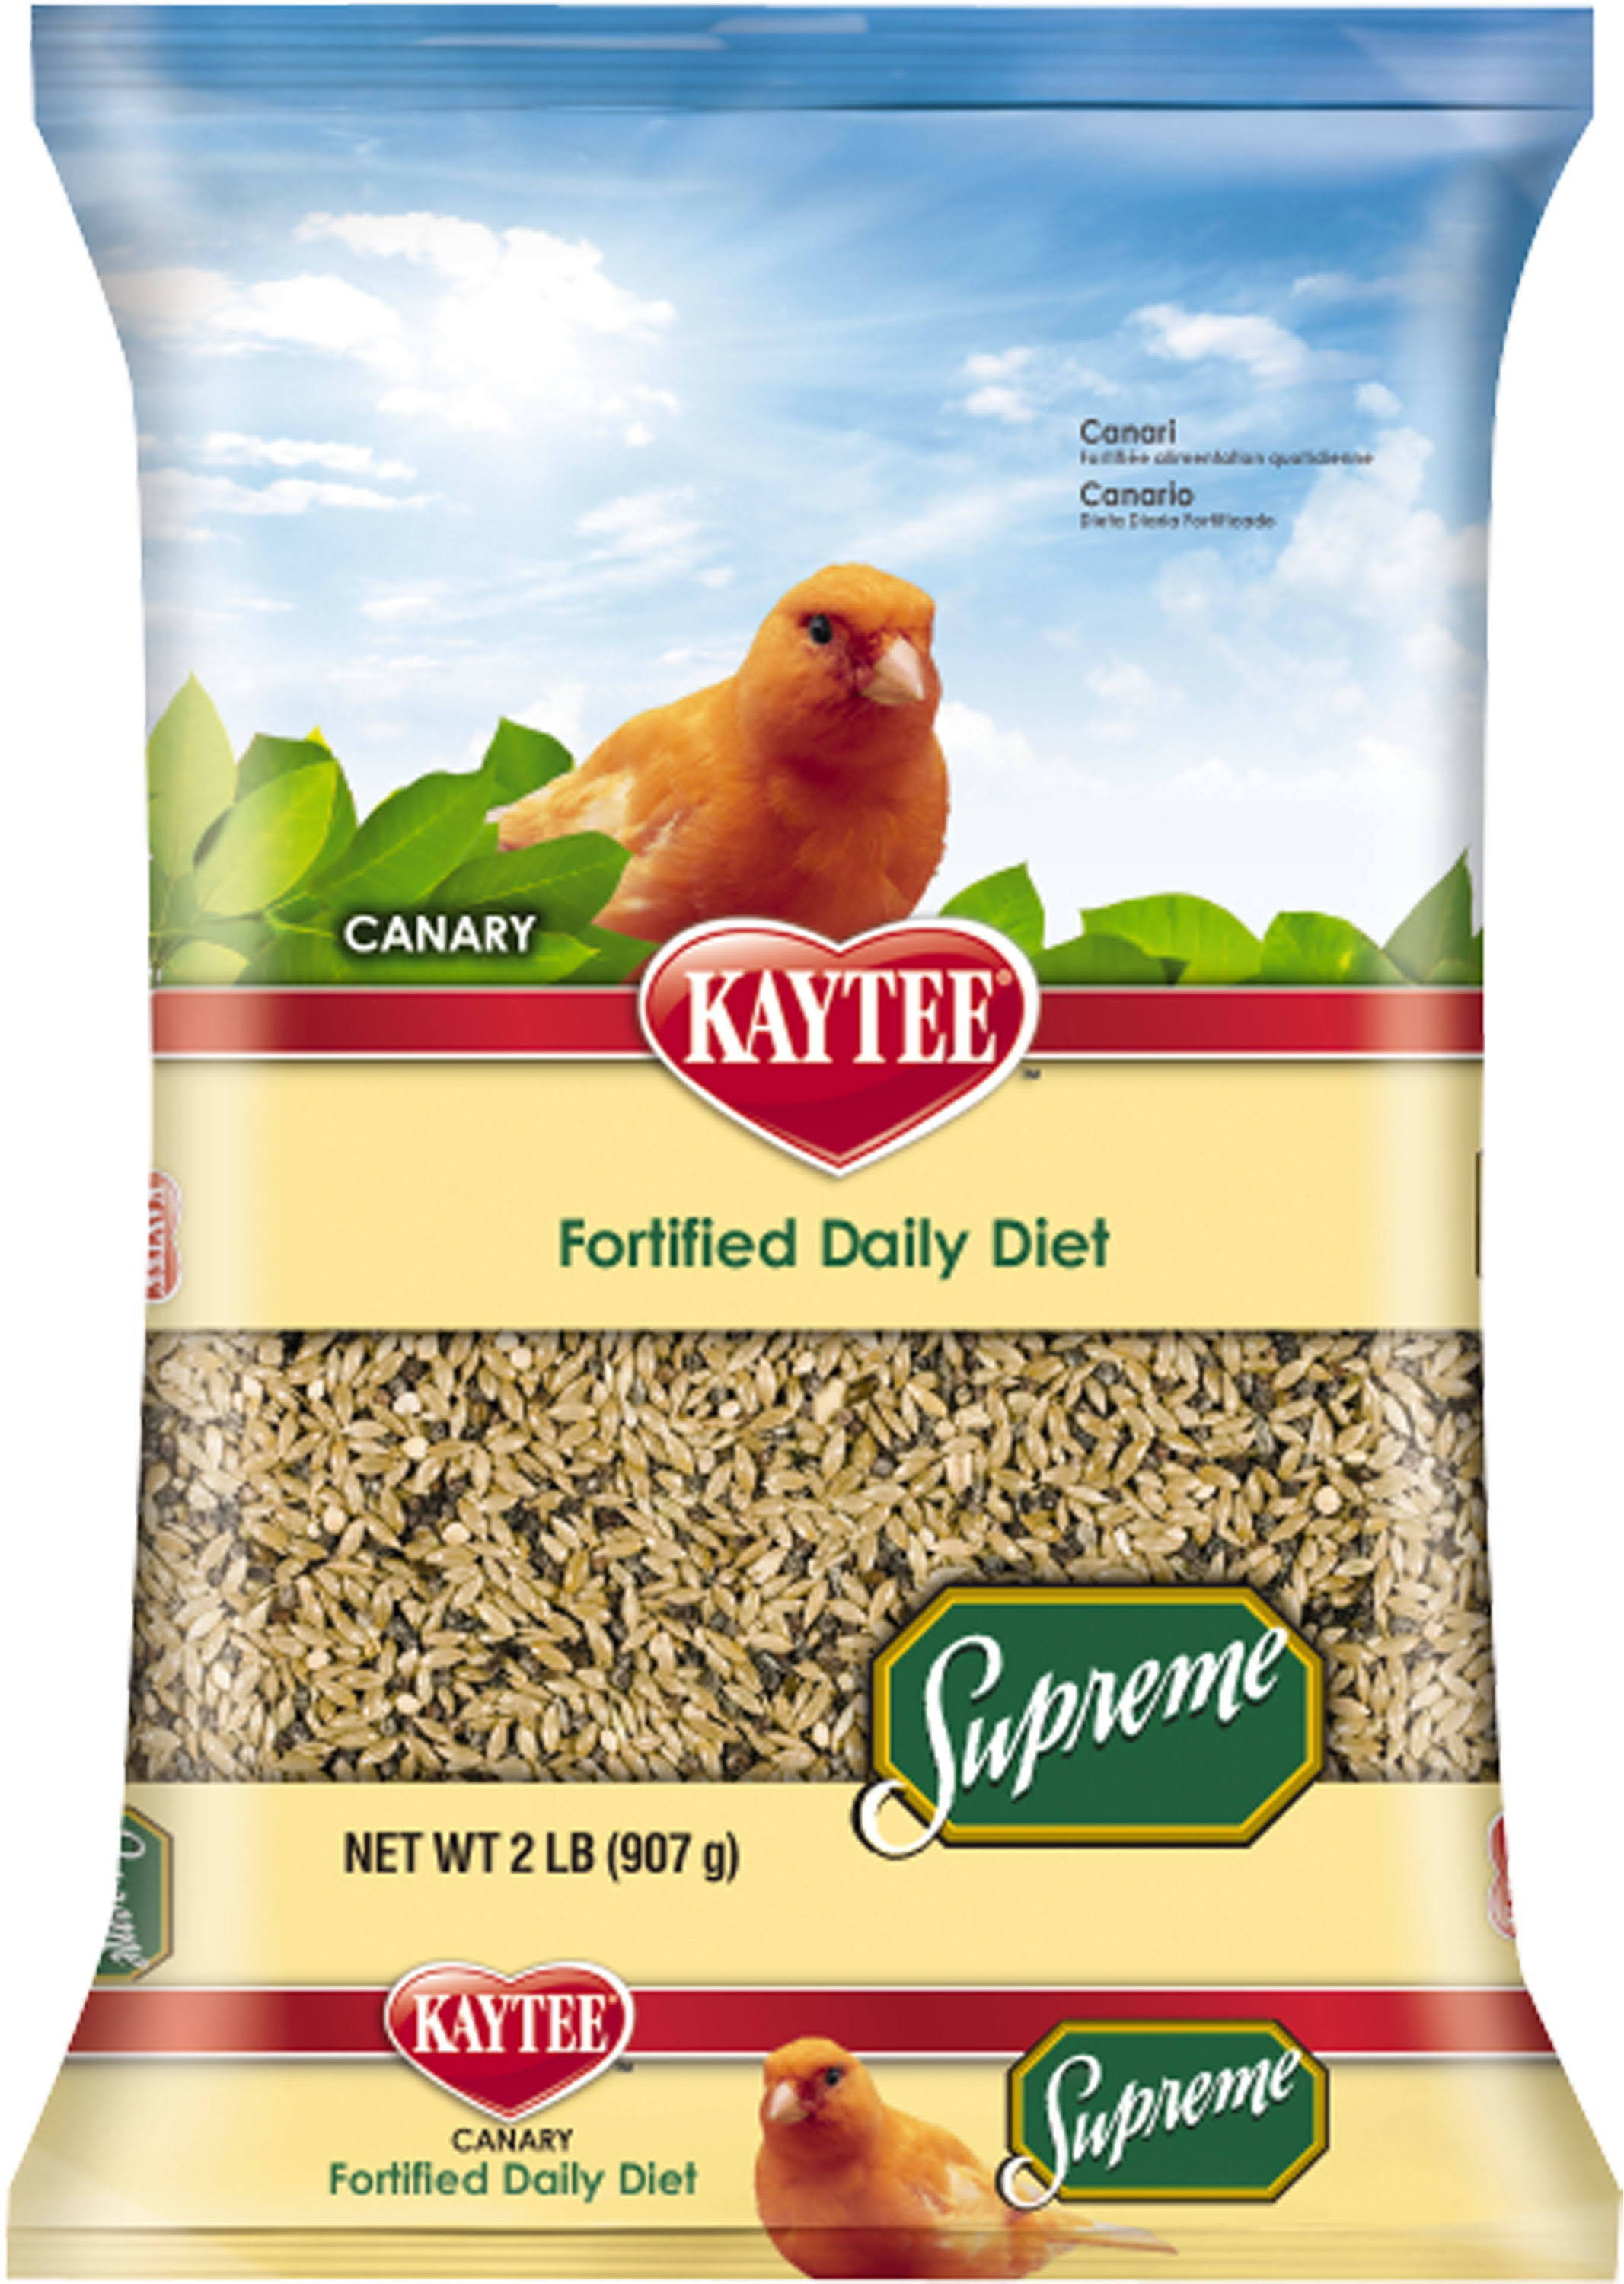 Kaytee Supreme Canary Food - 2 lb